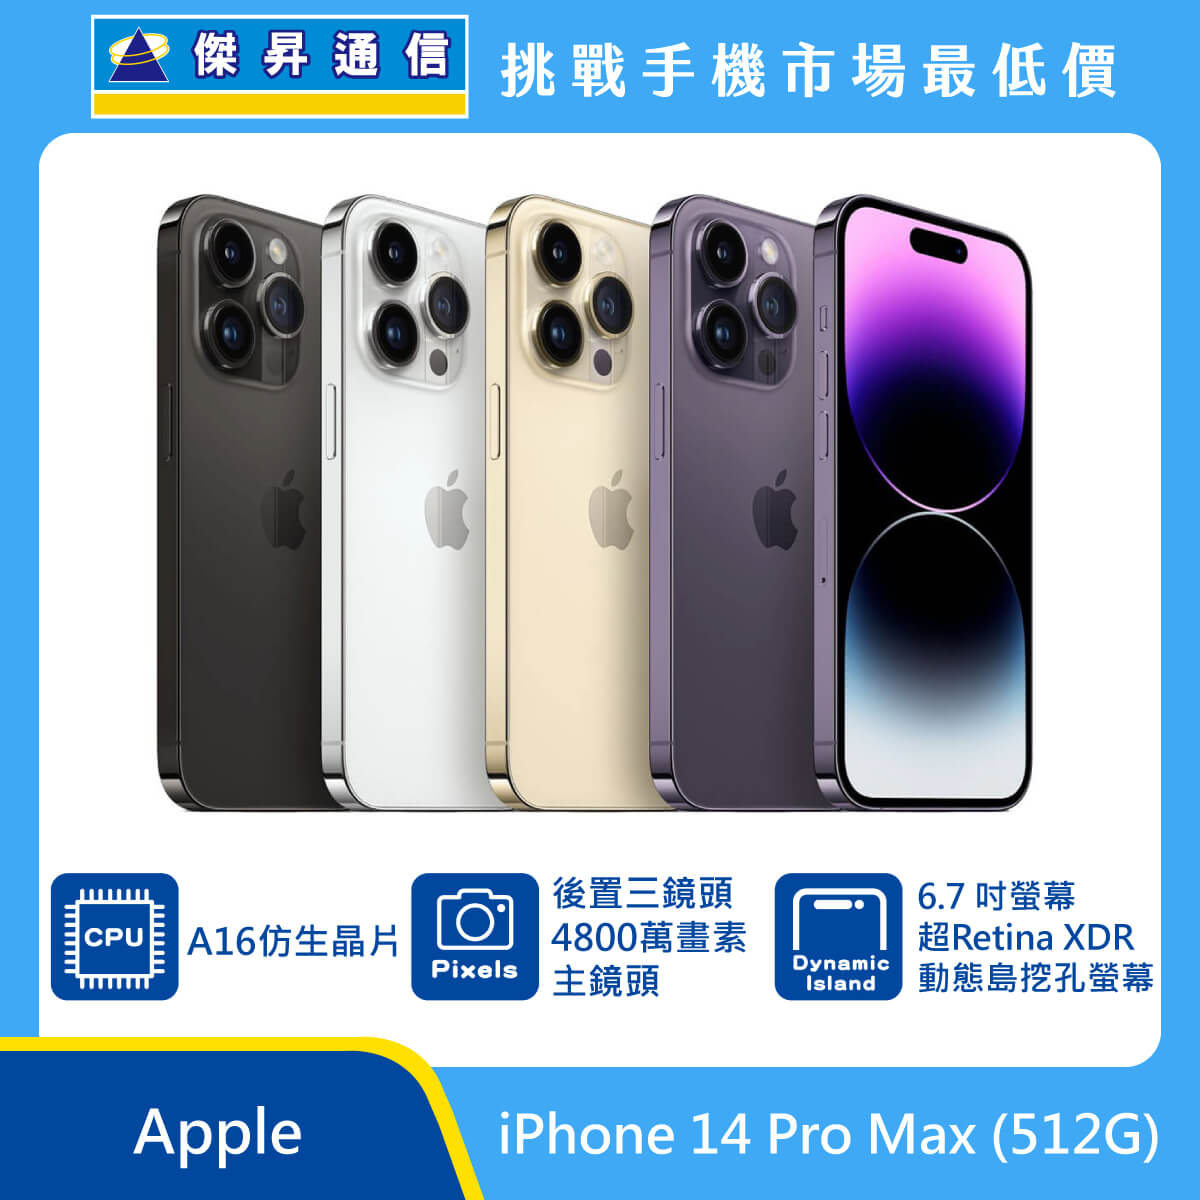 Apple iPhone 14 Pro Max (512G)